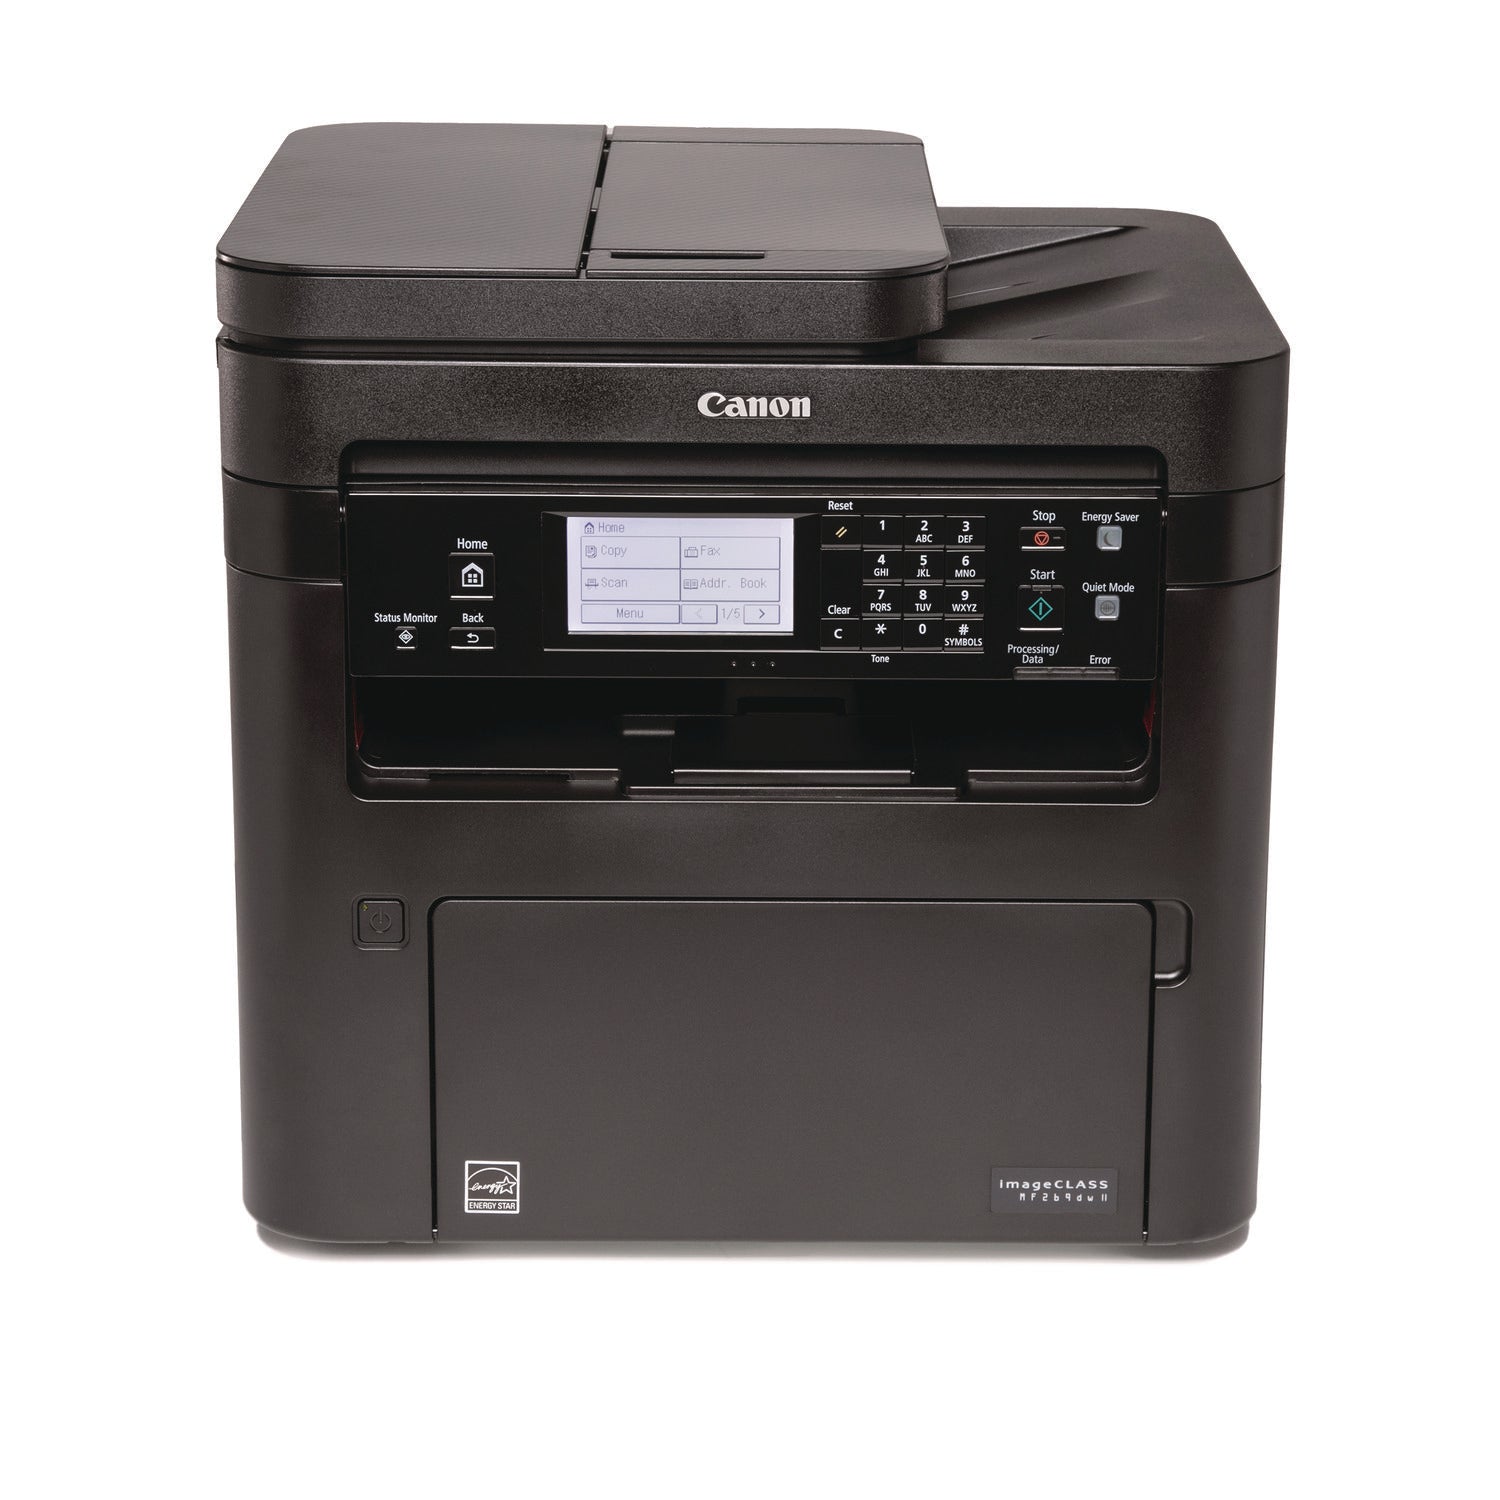 imageclass-mf269dw-ii-vp-wireless-multifunction-laser-printer-copy-fax-print-scan_cnm5938c001 - 1